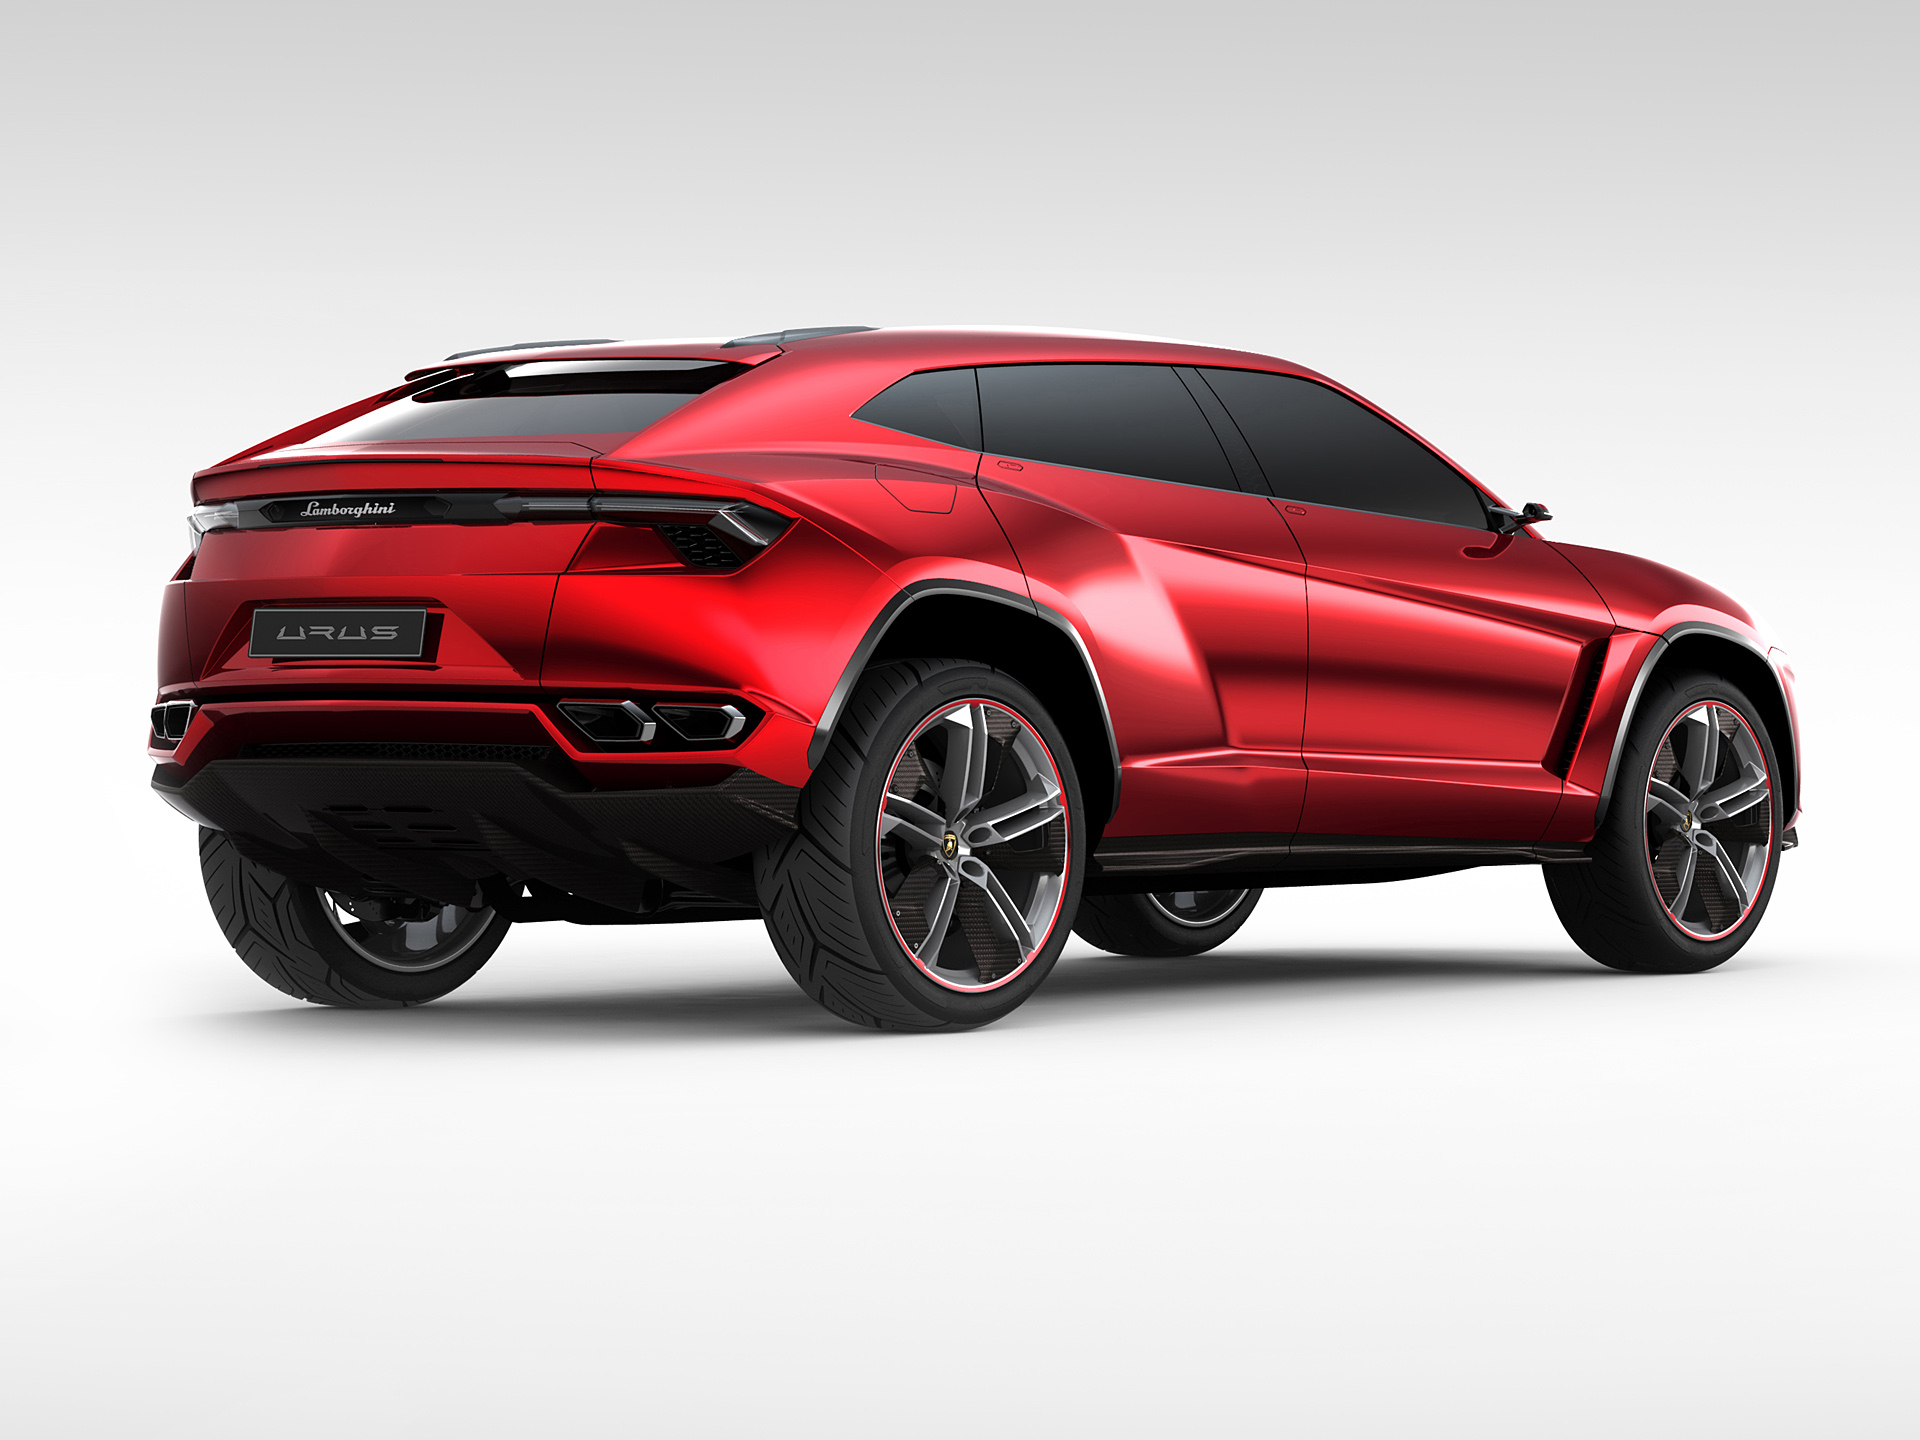  2012 Lamborghini Urus Concept Wallpaper.